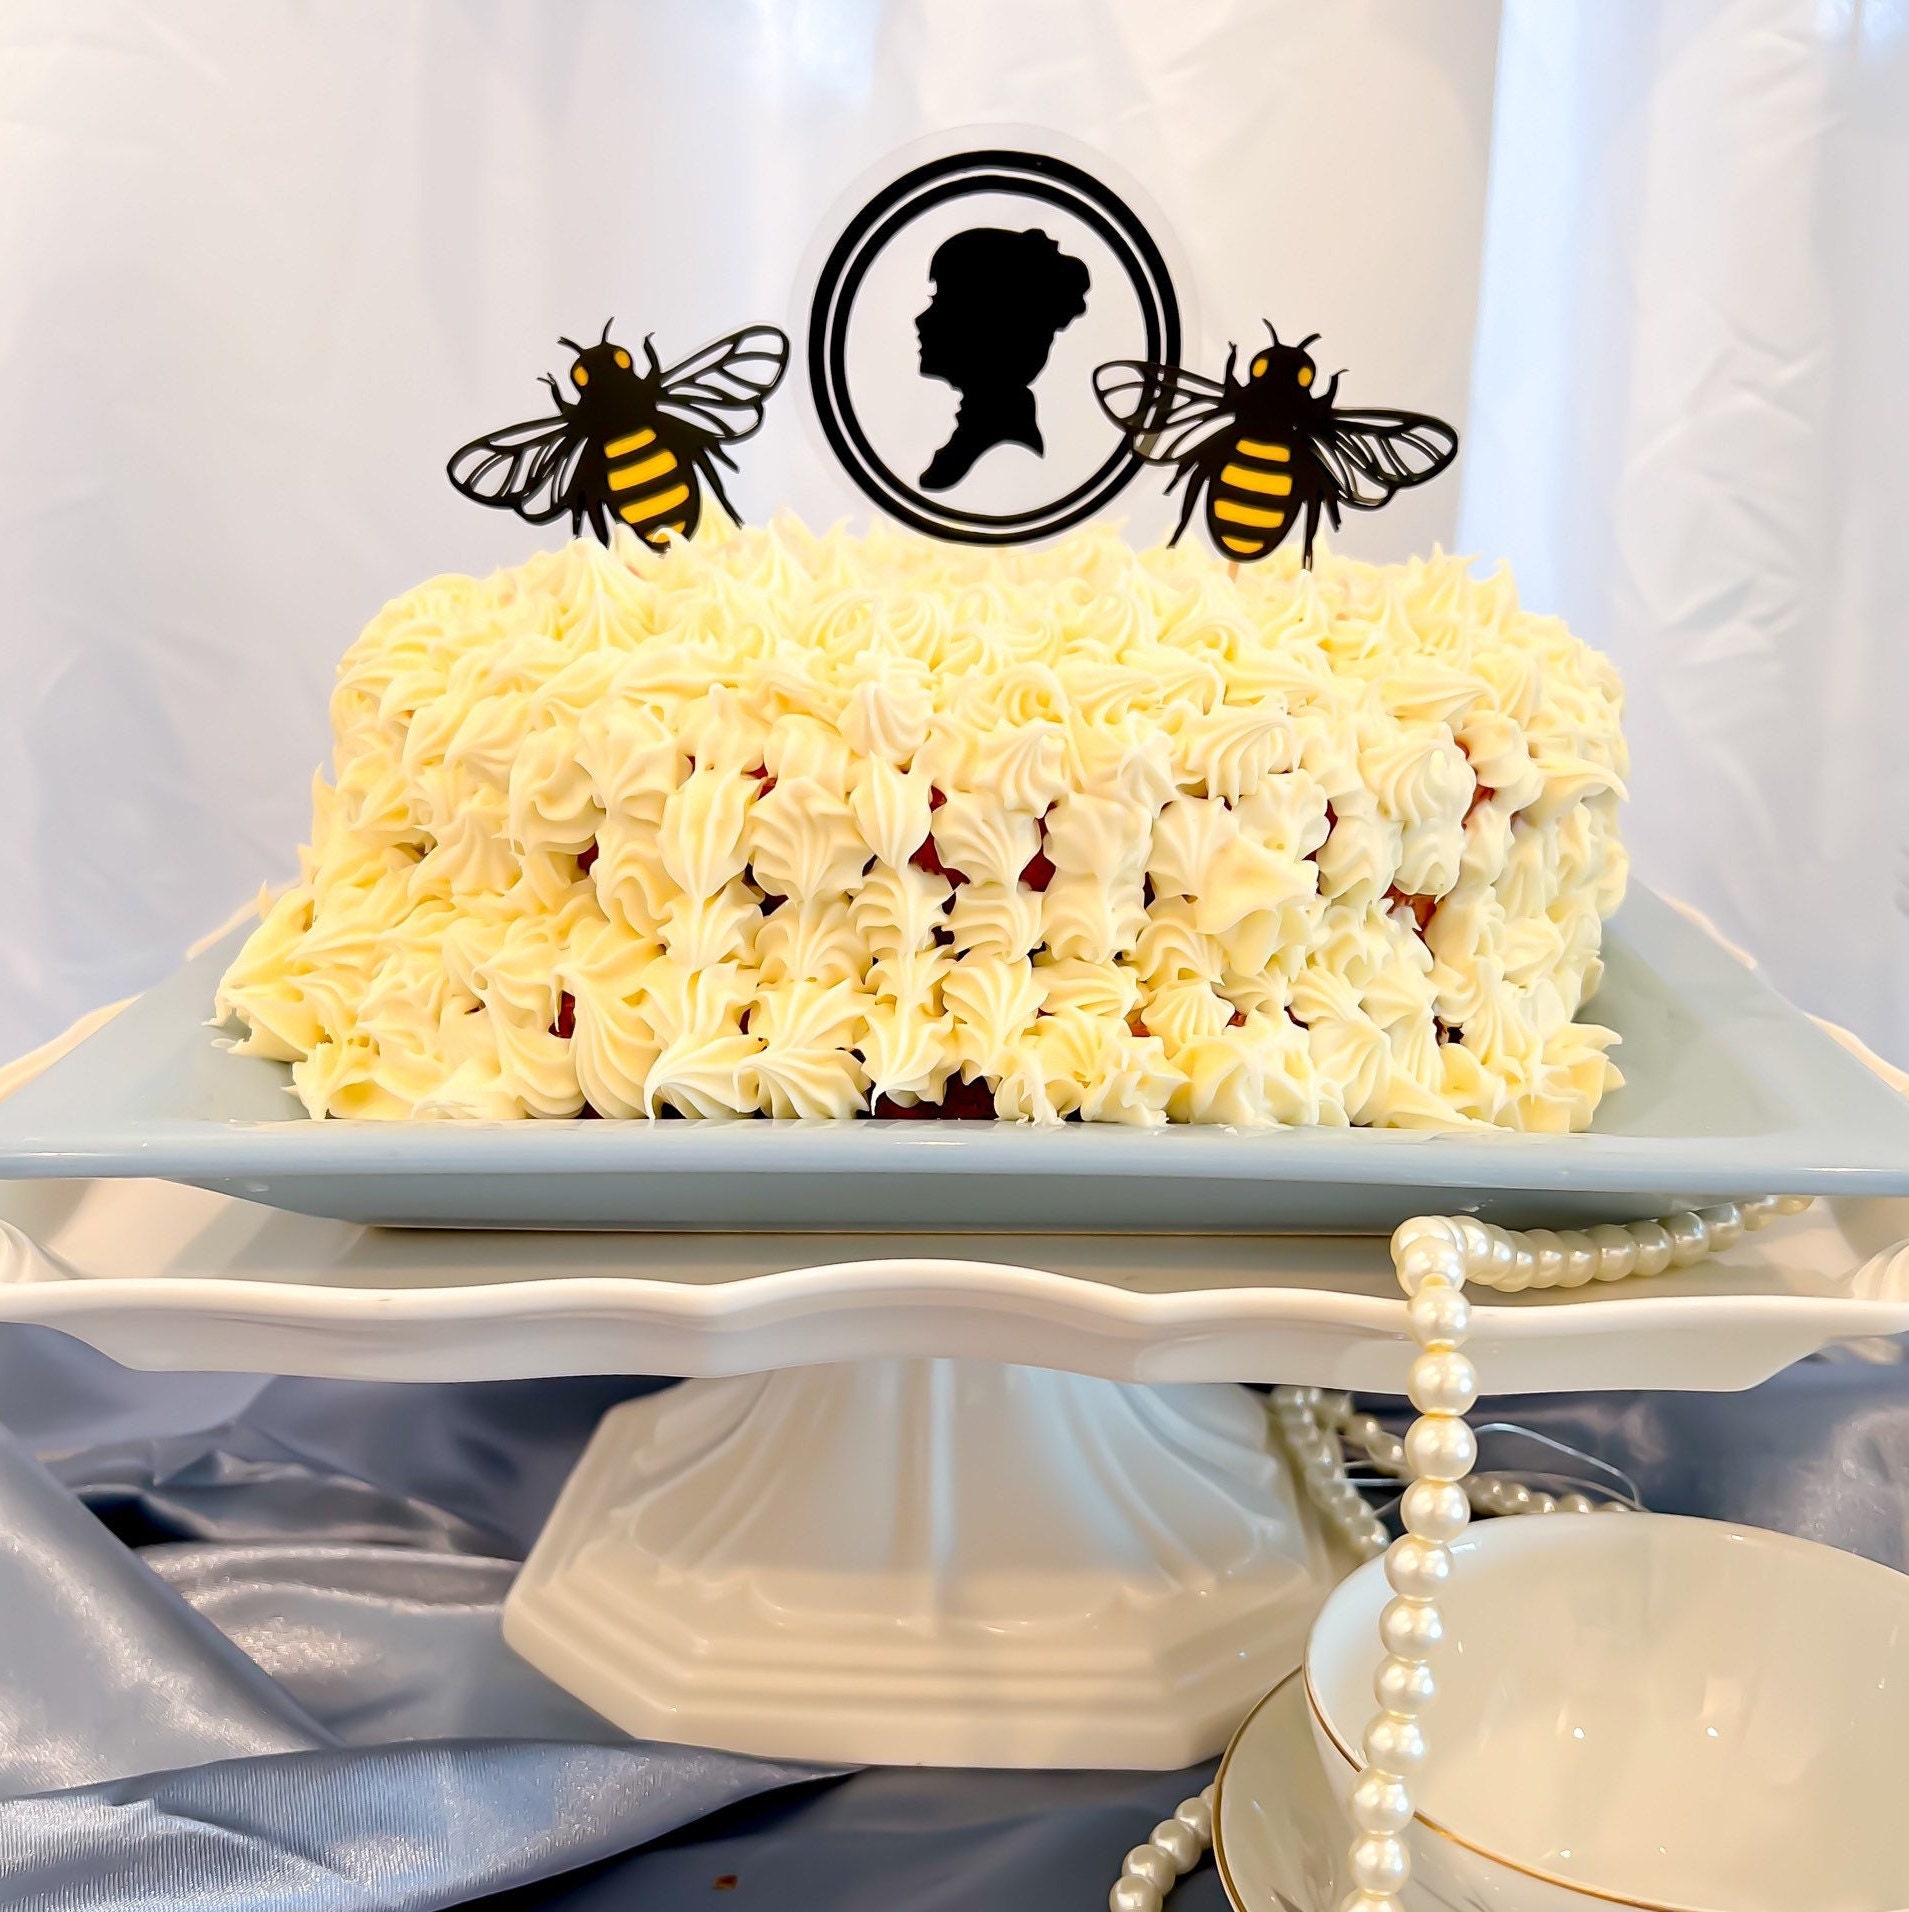 Bees Cakes Decorations- Bumble Bee Shaped Edible Hard Sugar